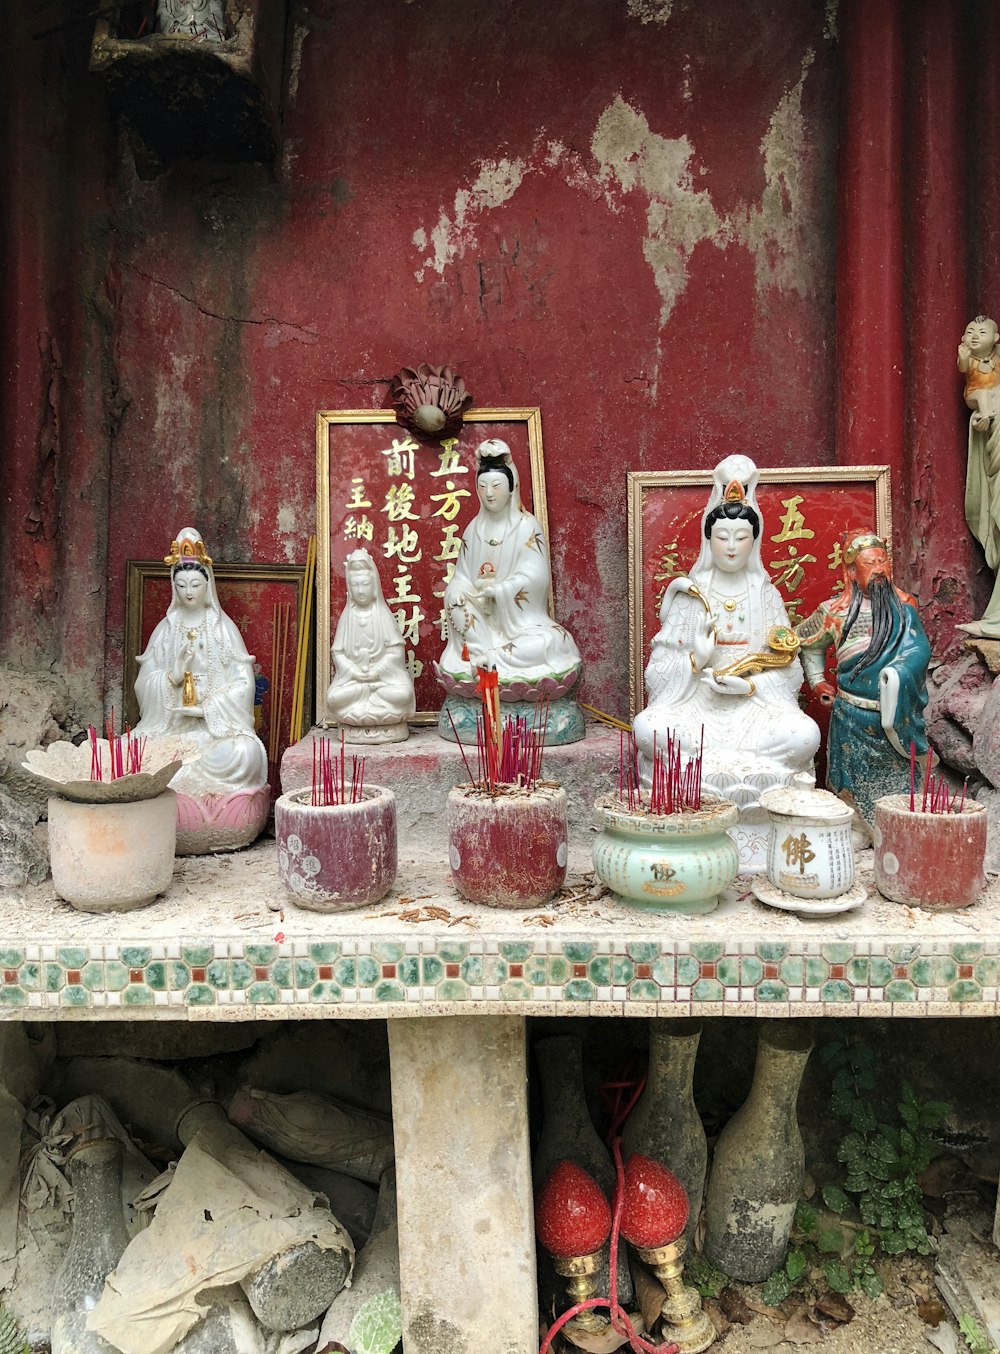 cinq figurines de dieu hindou en céramique assorties